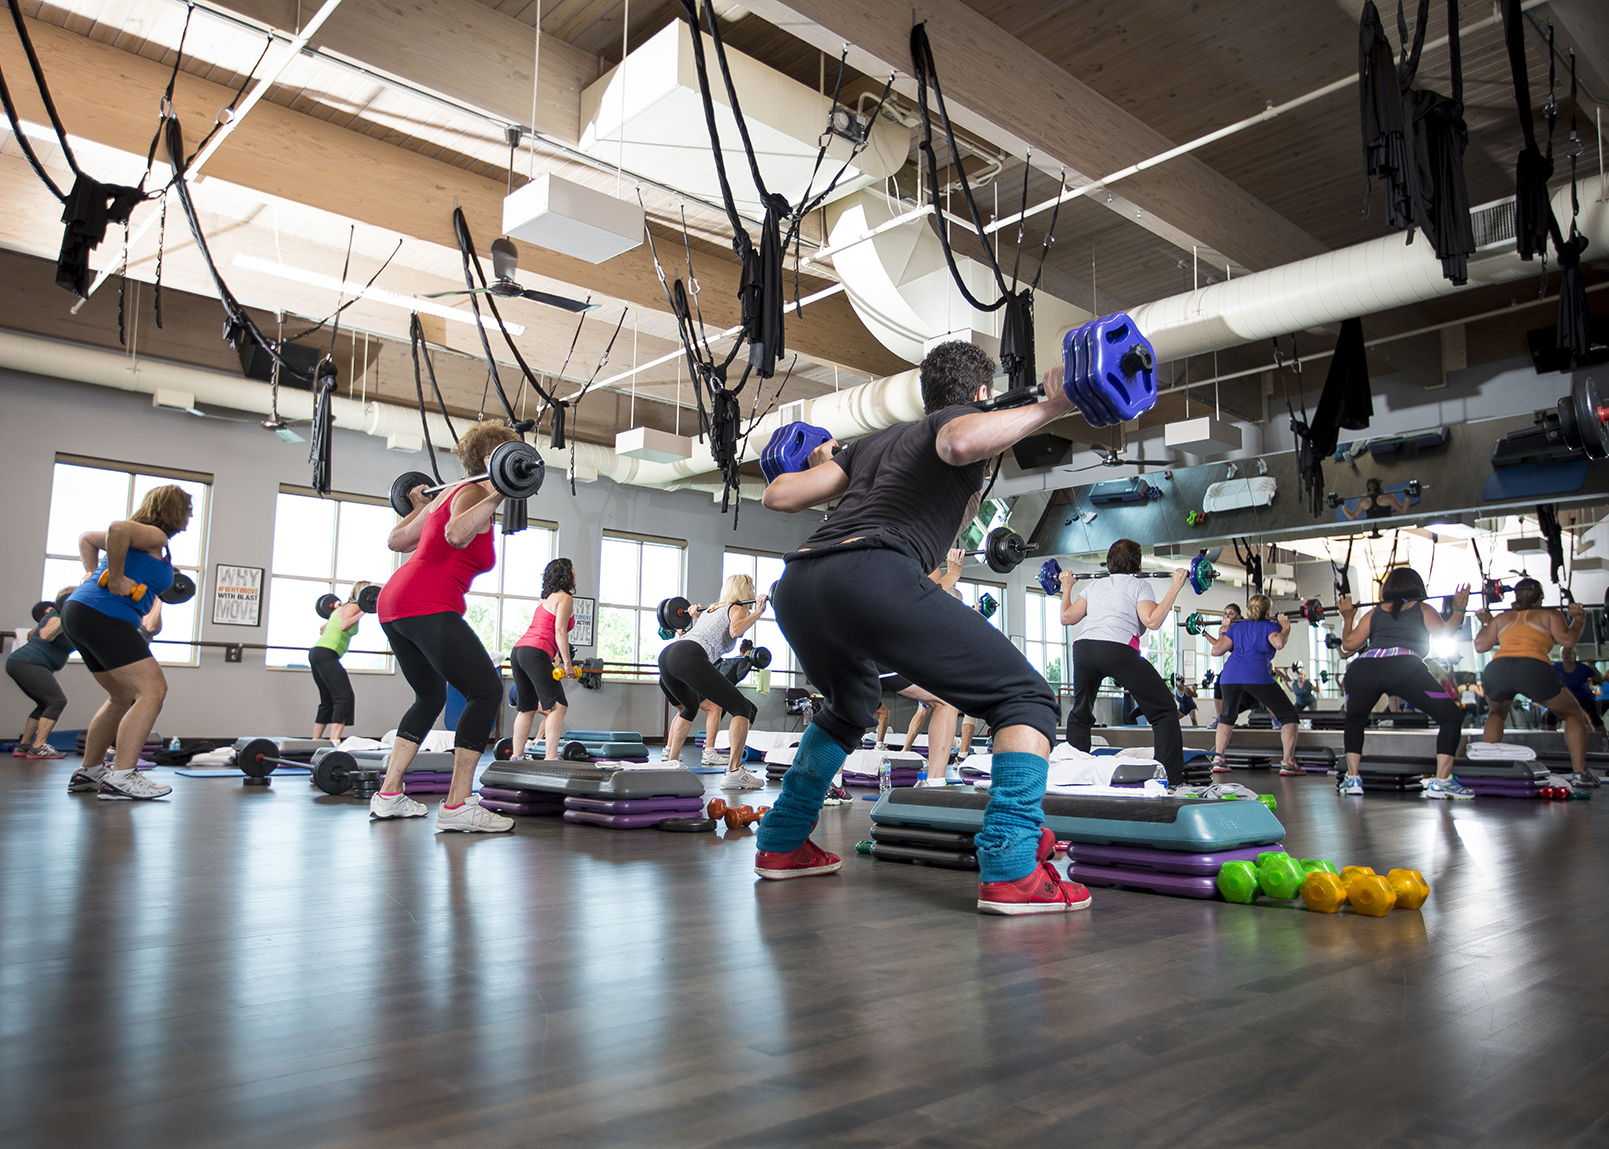 Group Exercise Studio 1 - Sky Fitness Center in Buffalo Grove